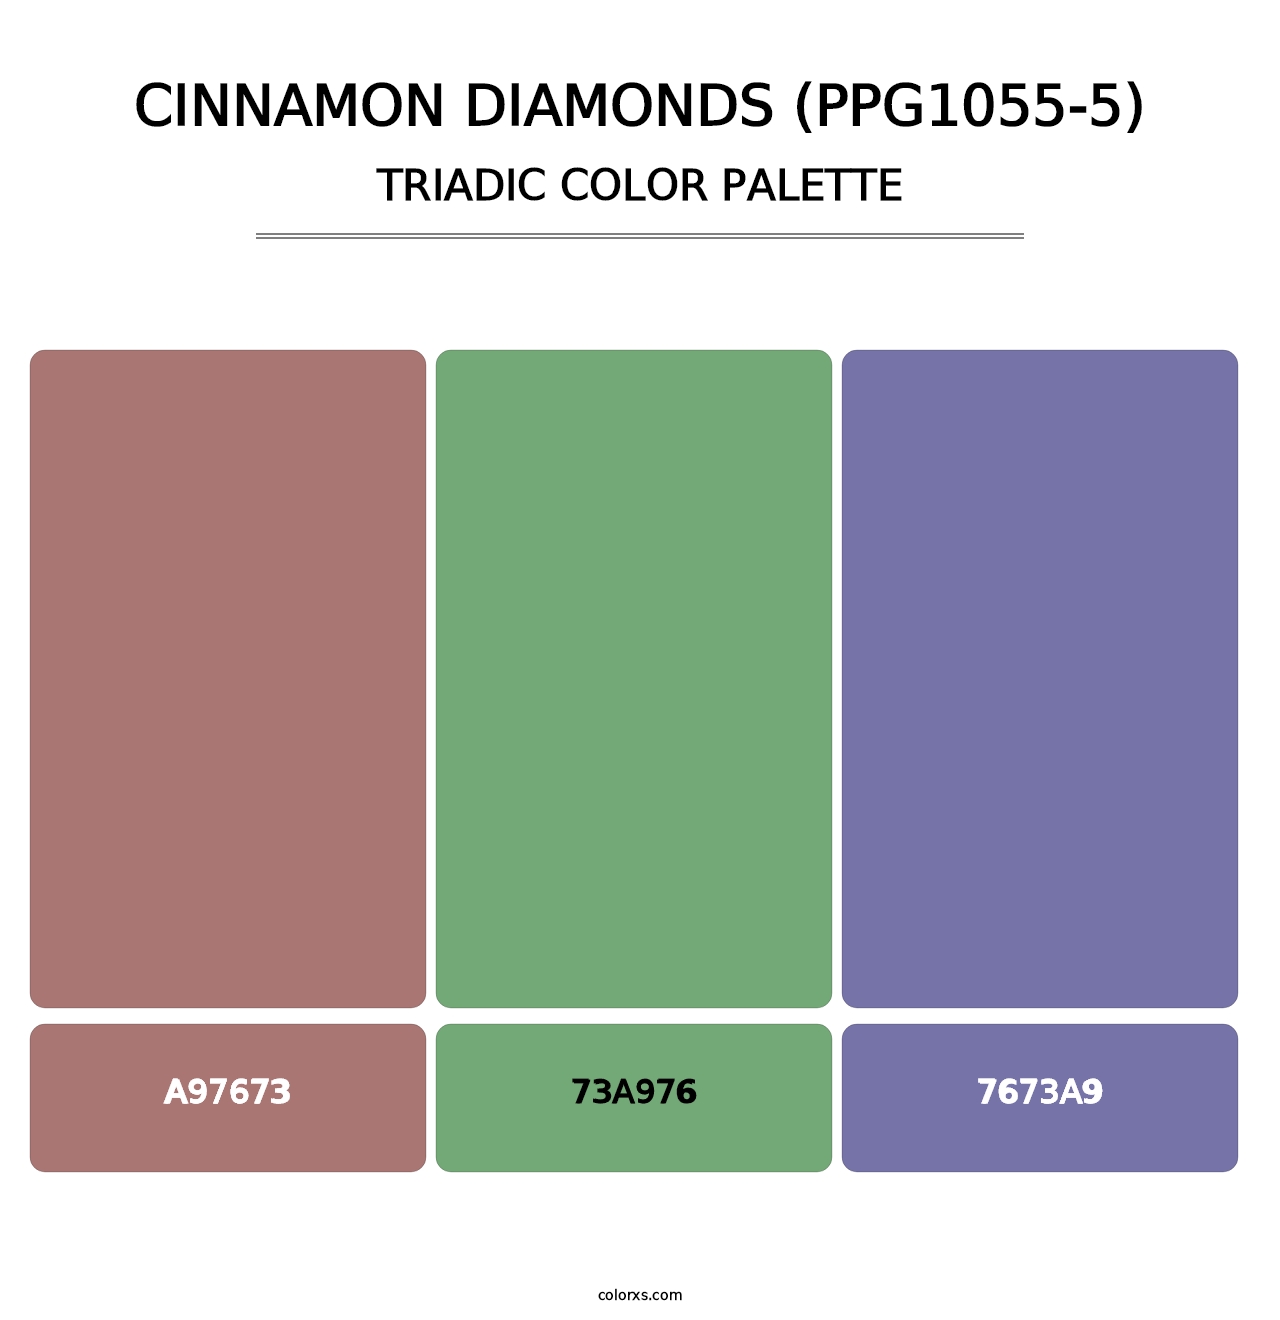 Cinnamon Diamonds (PPG1055-5) - Triadic Color Palette